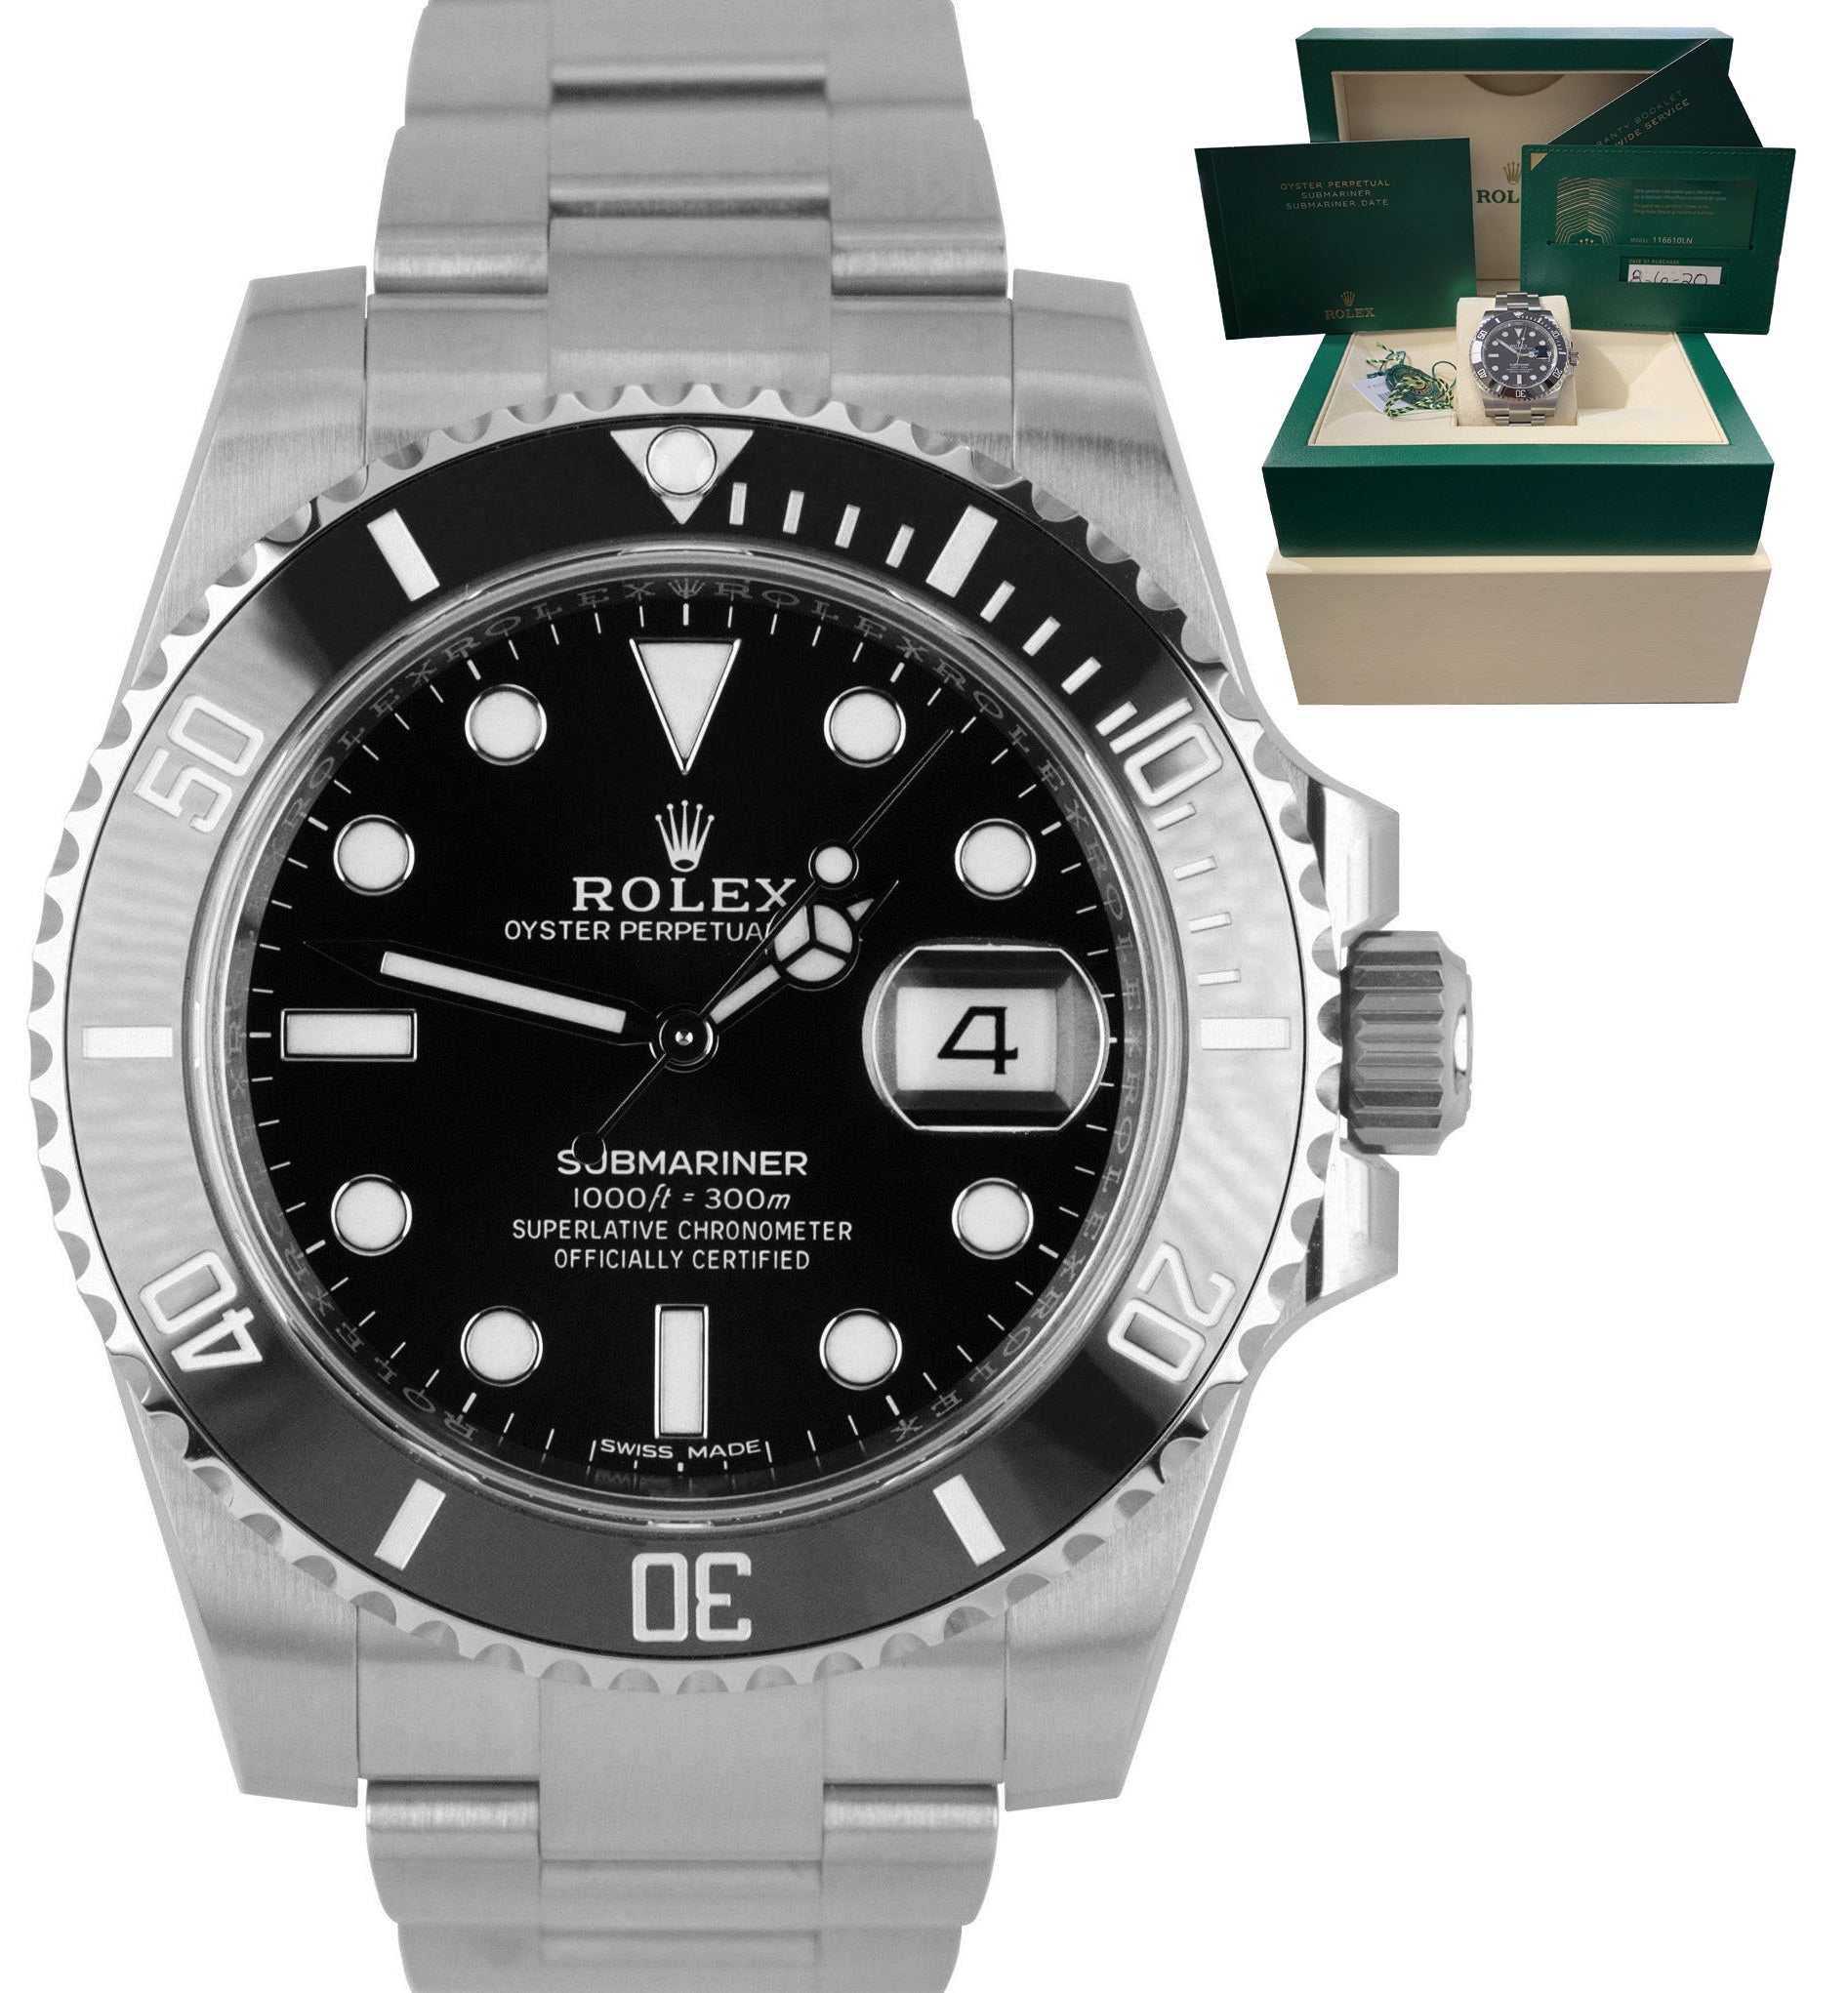 NEW AUG 2020 NEW CARD Rolex Submariner Date 116610LN Steel Black Ceramic Watch